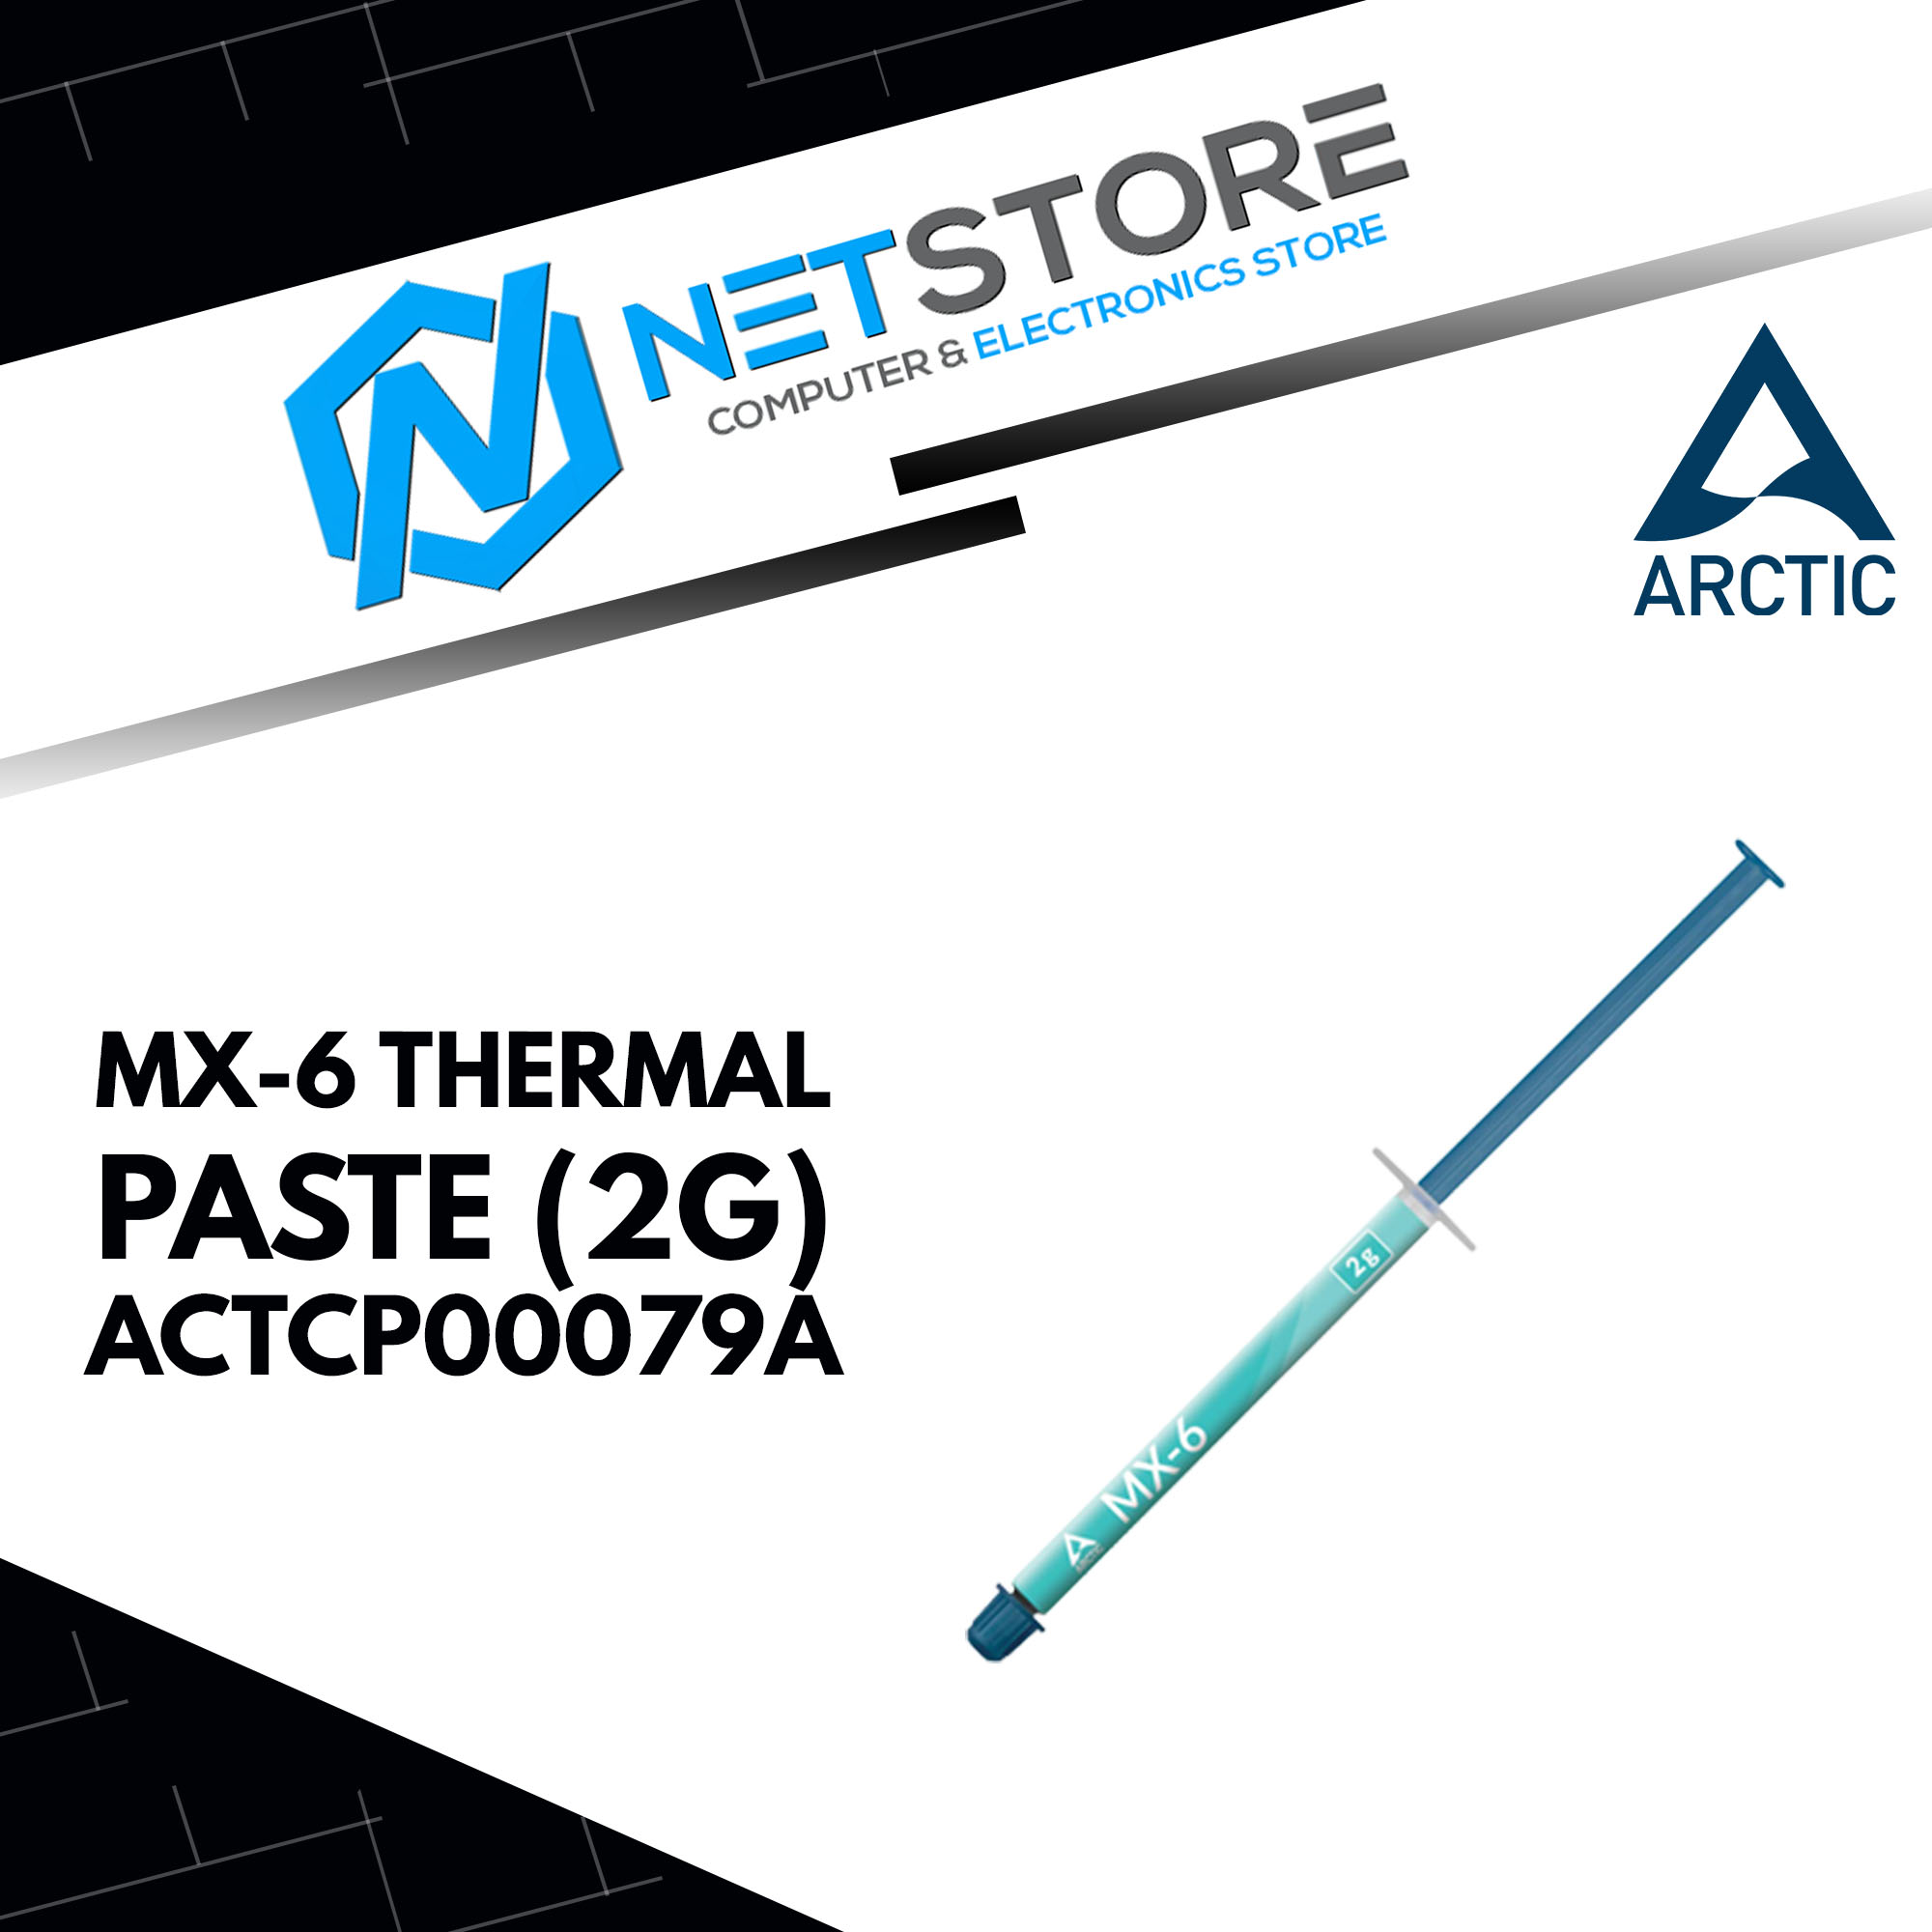 ARCTIC MX-6 THERMAL PASTE (2G) - ACTCP00079A